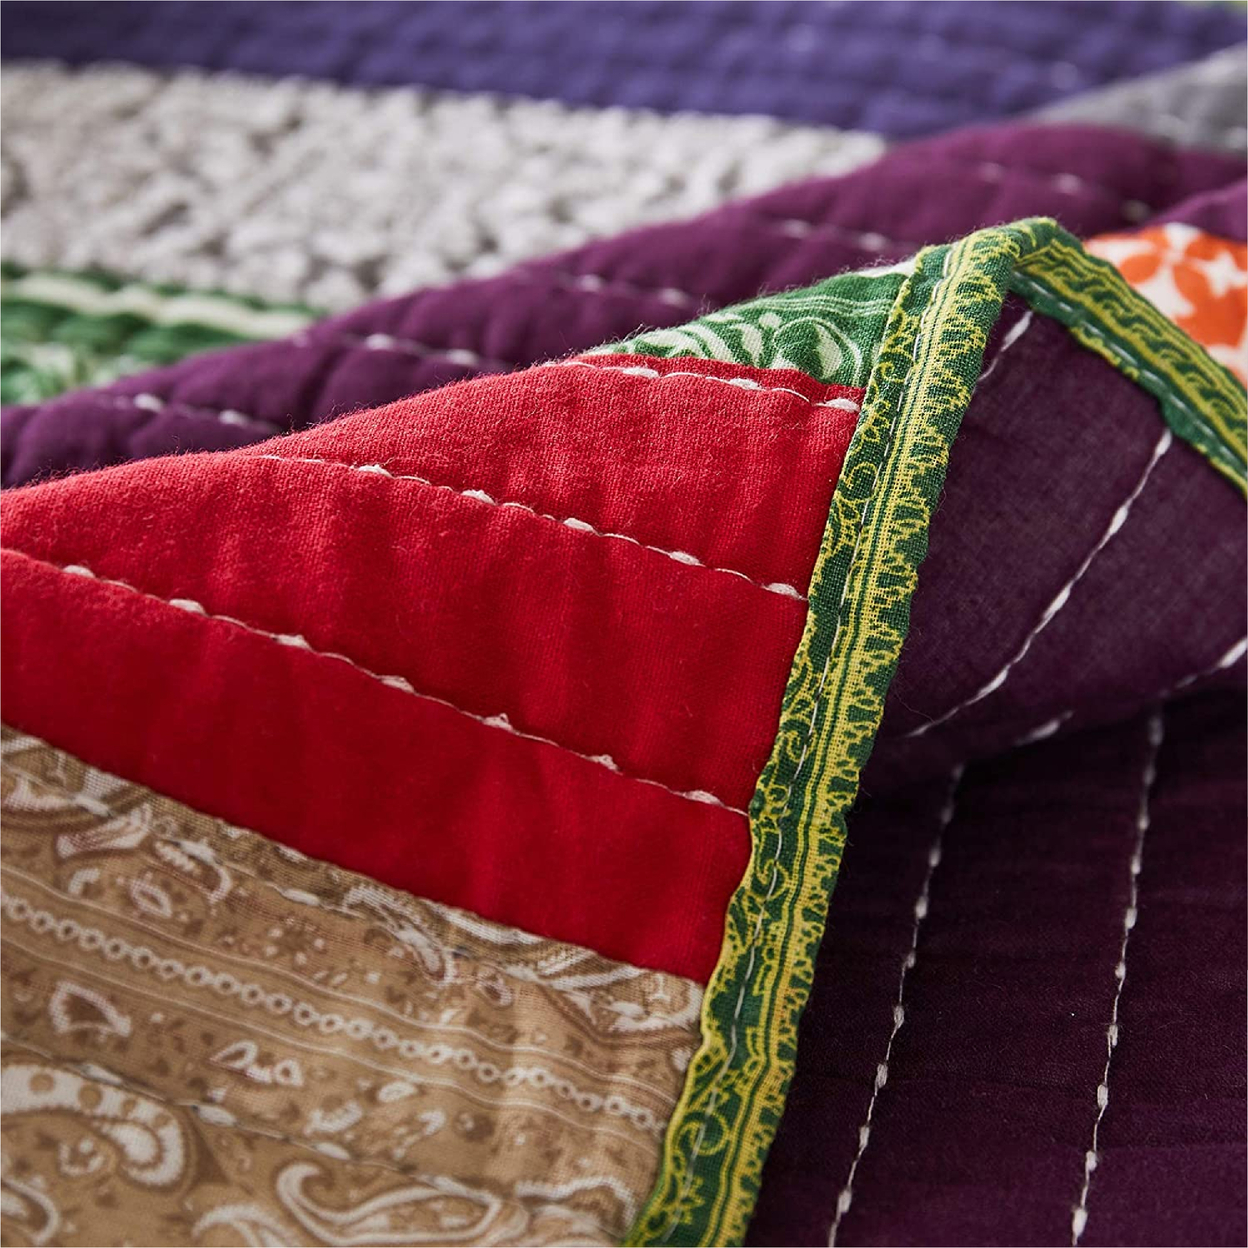 60 Inch Cotton Throw Blanket, Multi Color Stripes, Kantha Hand Quilting- Saltoro Sherpi